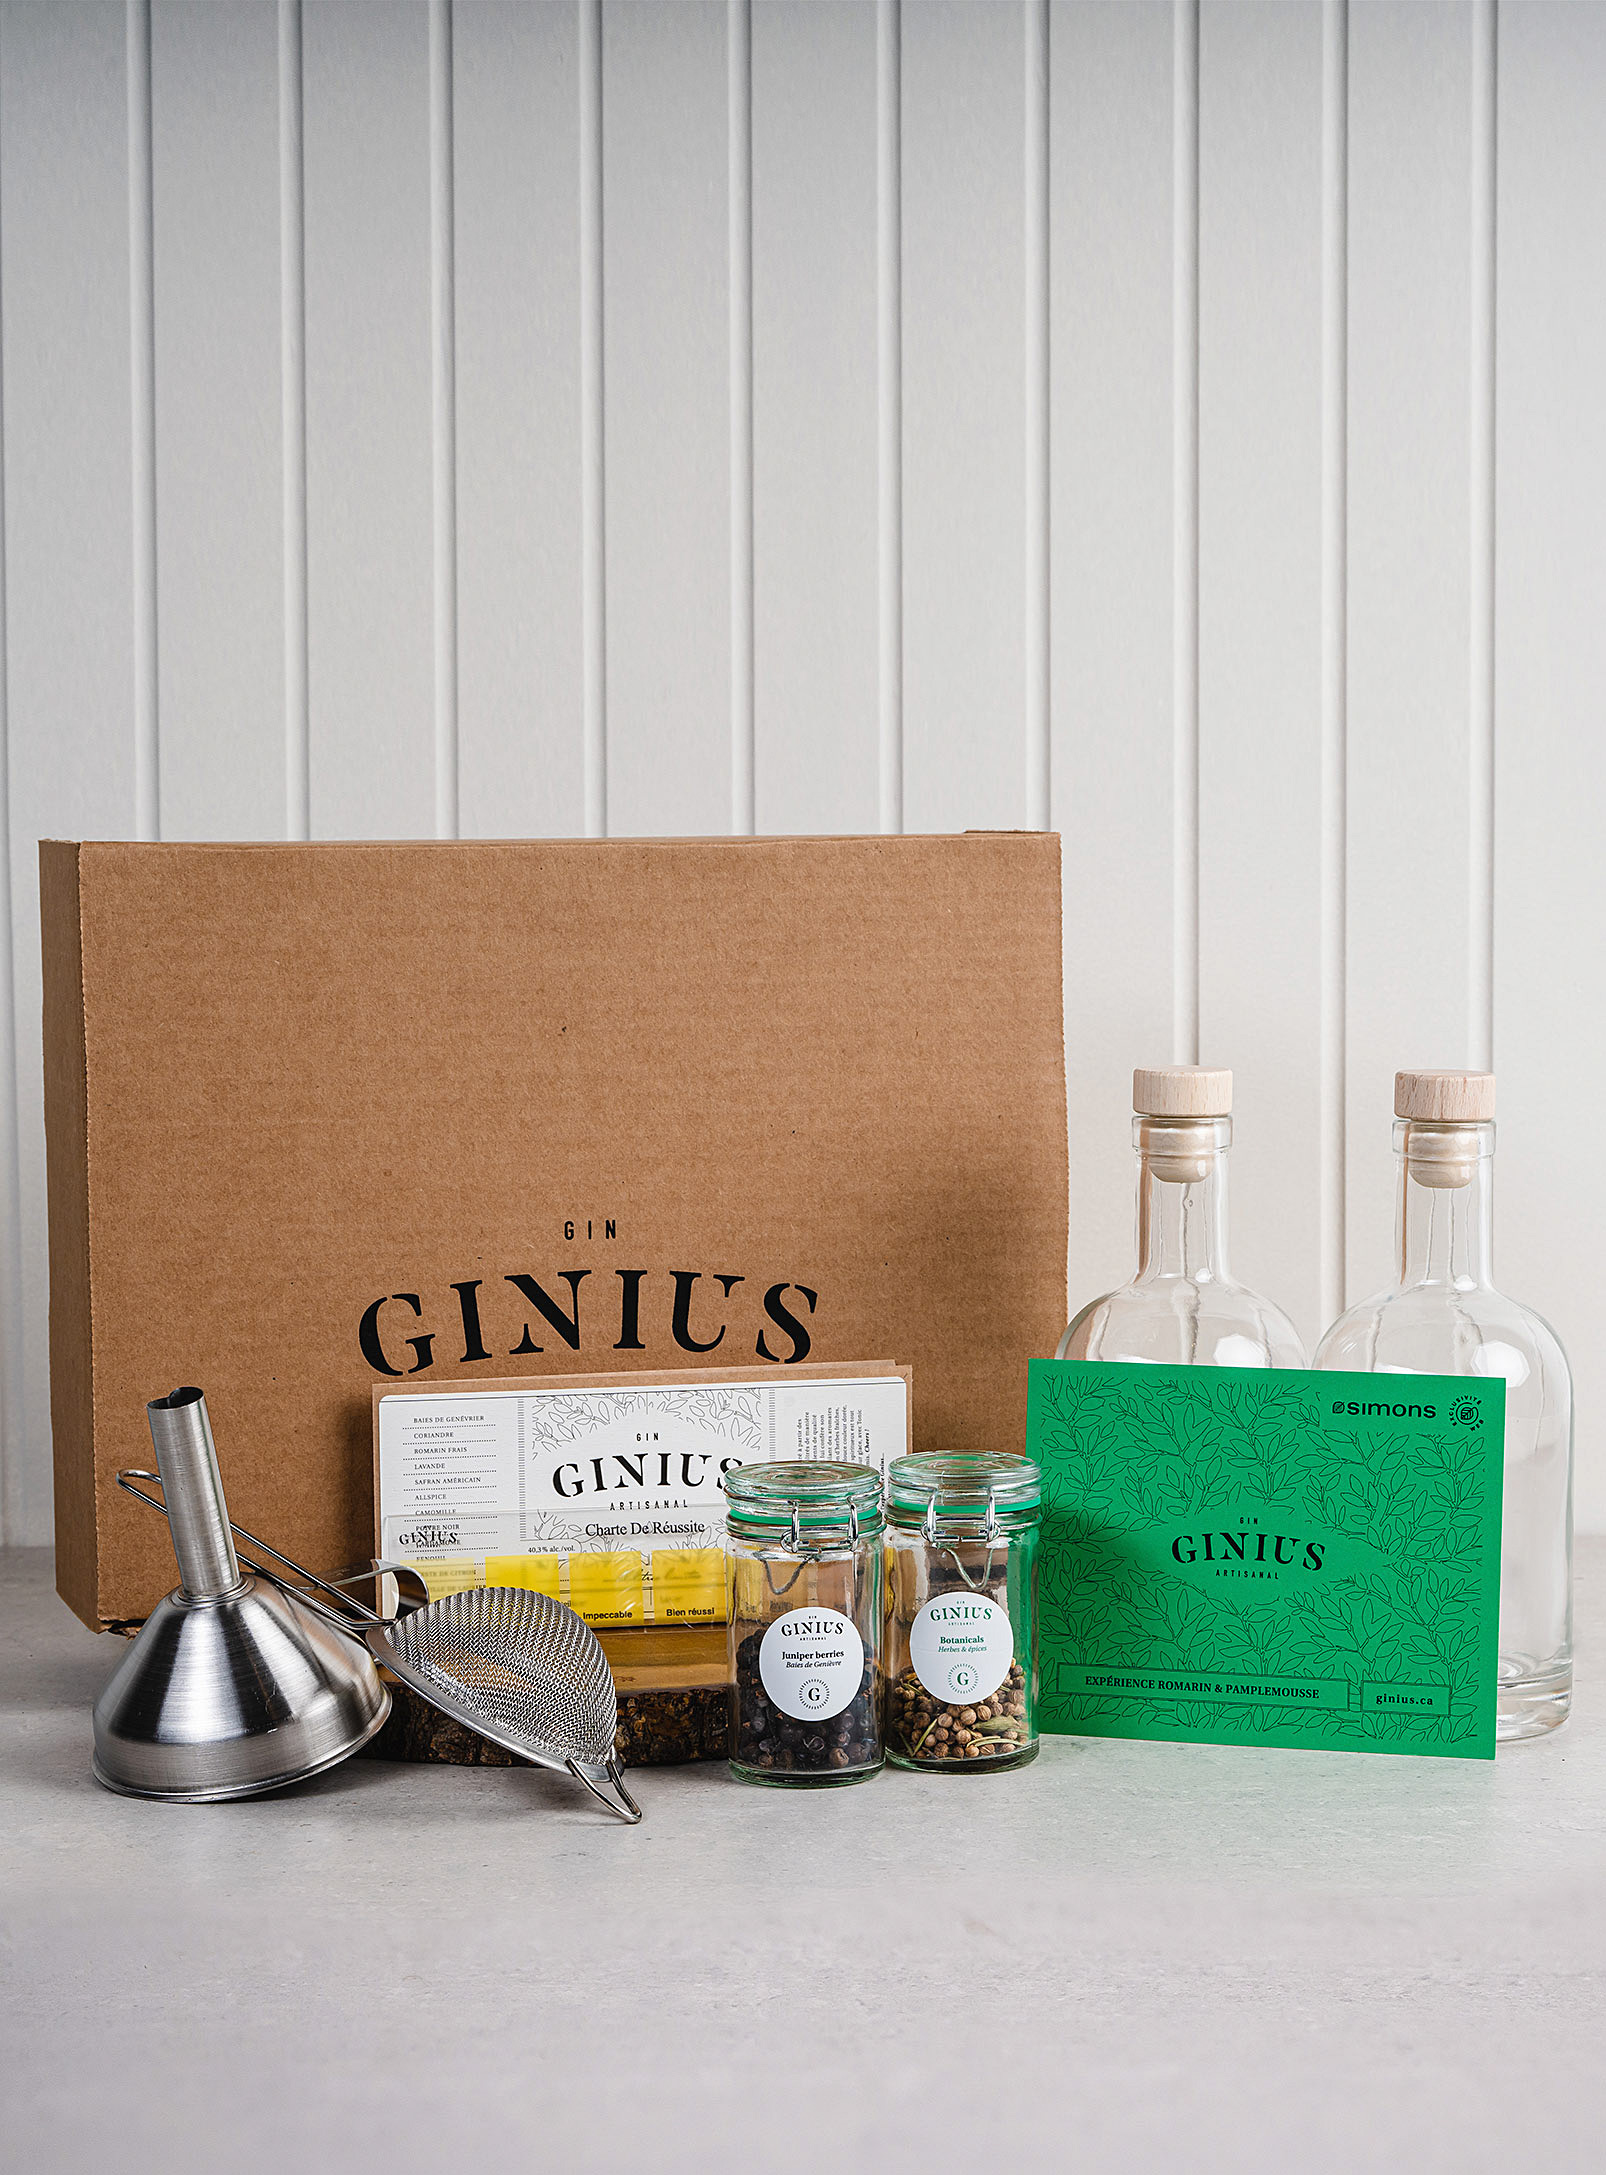 Ginius - L'ensemble de fabrication de gin artisanal